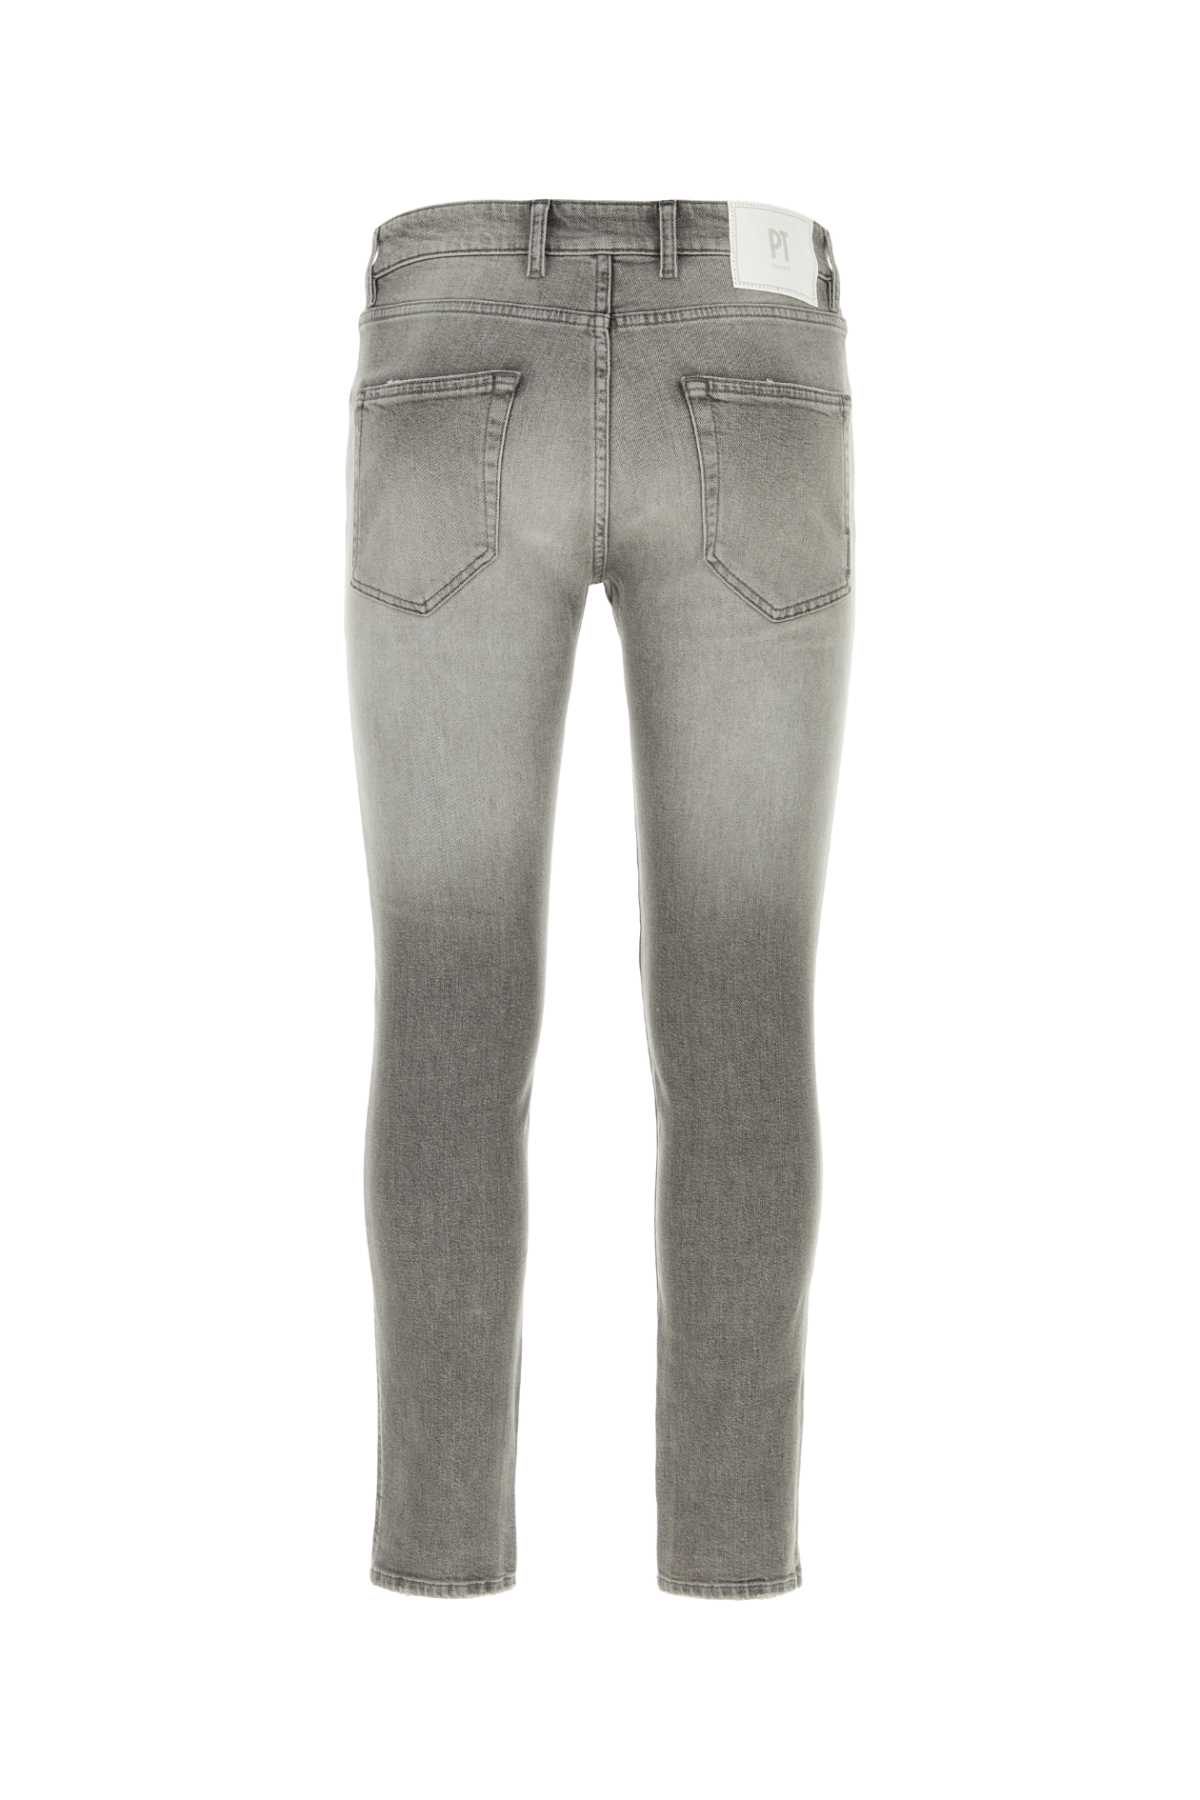 Pt01 Grey Denim Jeans In Grigiochiaro